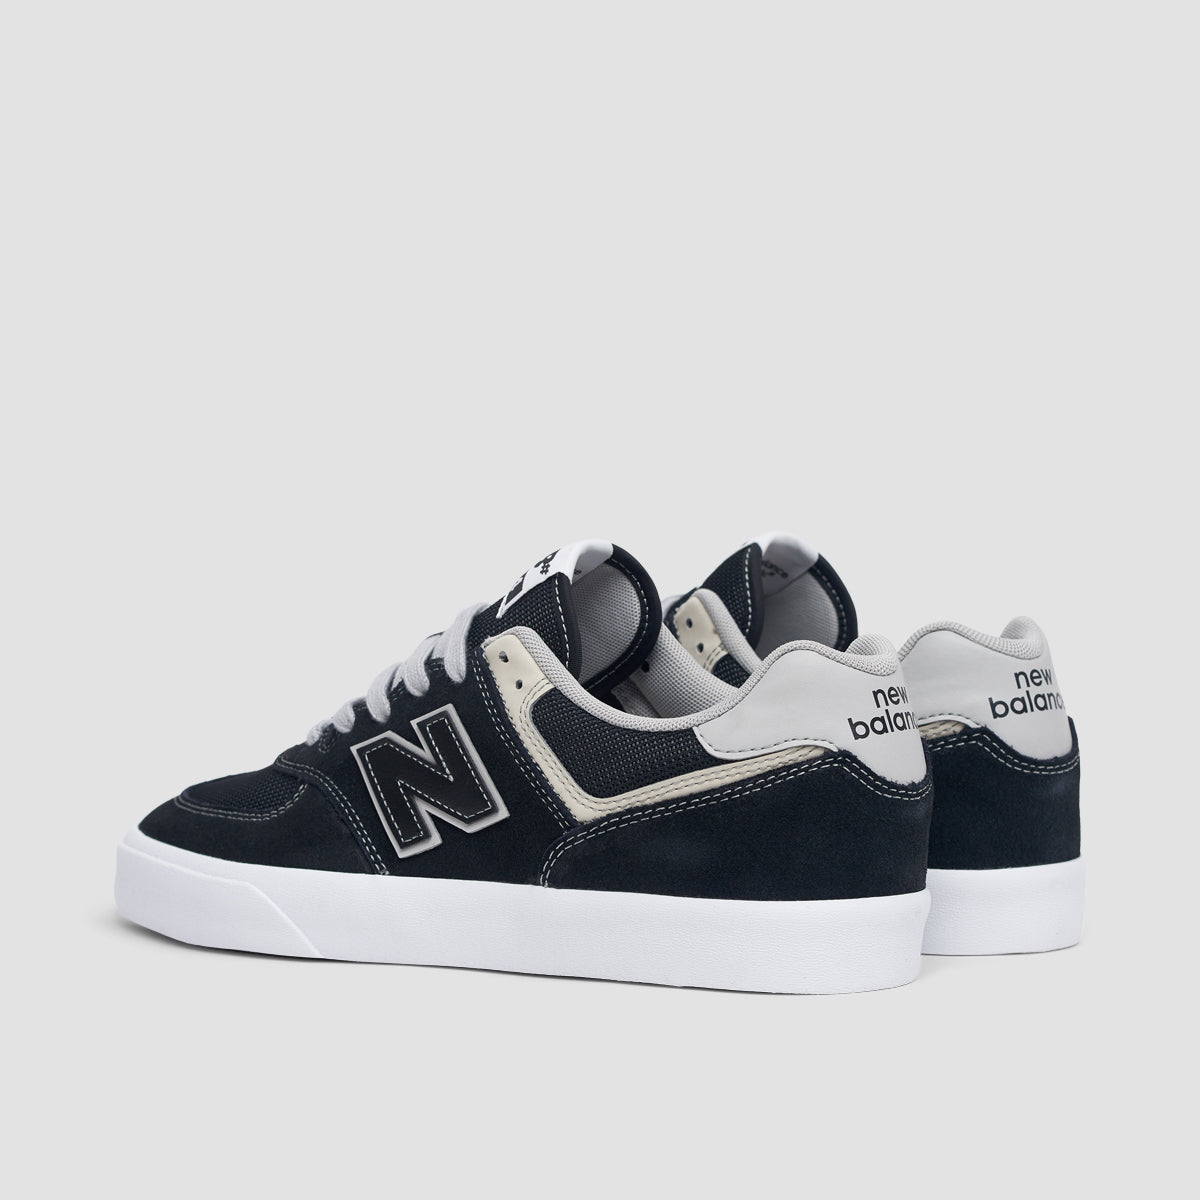 New Balance Numeric 574 Vulc Shoes - Black/Grey